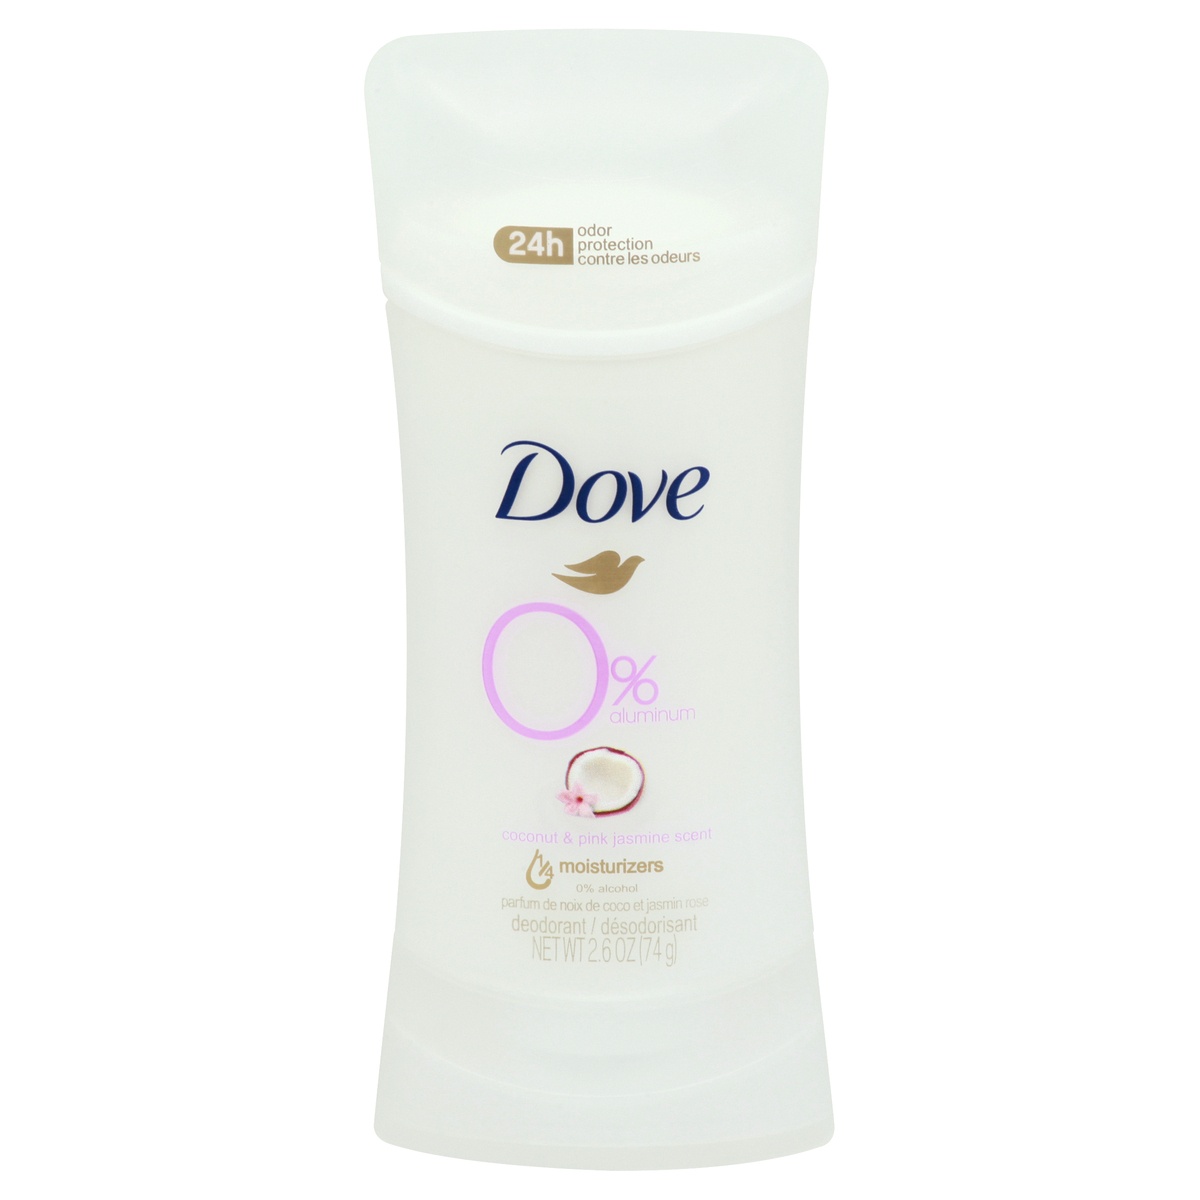 slide 1 of 29, Dove 0% Aluminum Coconut & Pink Jasmine Scent Deodorant 2.6 oz, 2.6 oz